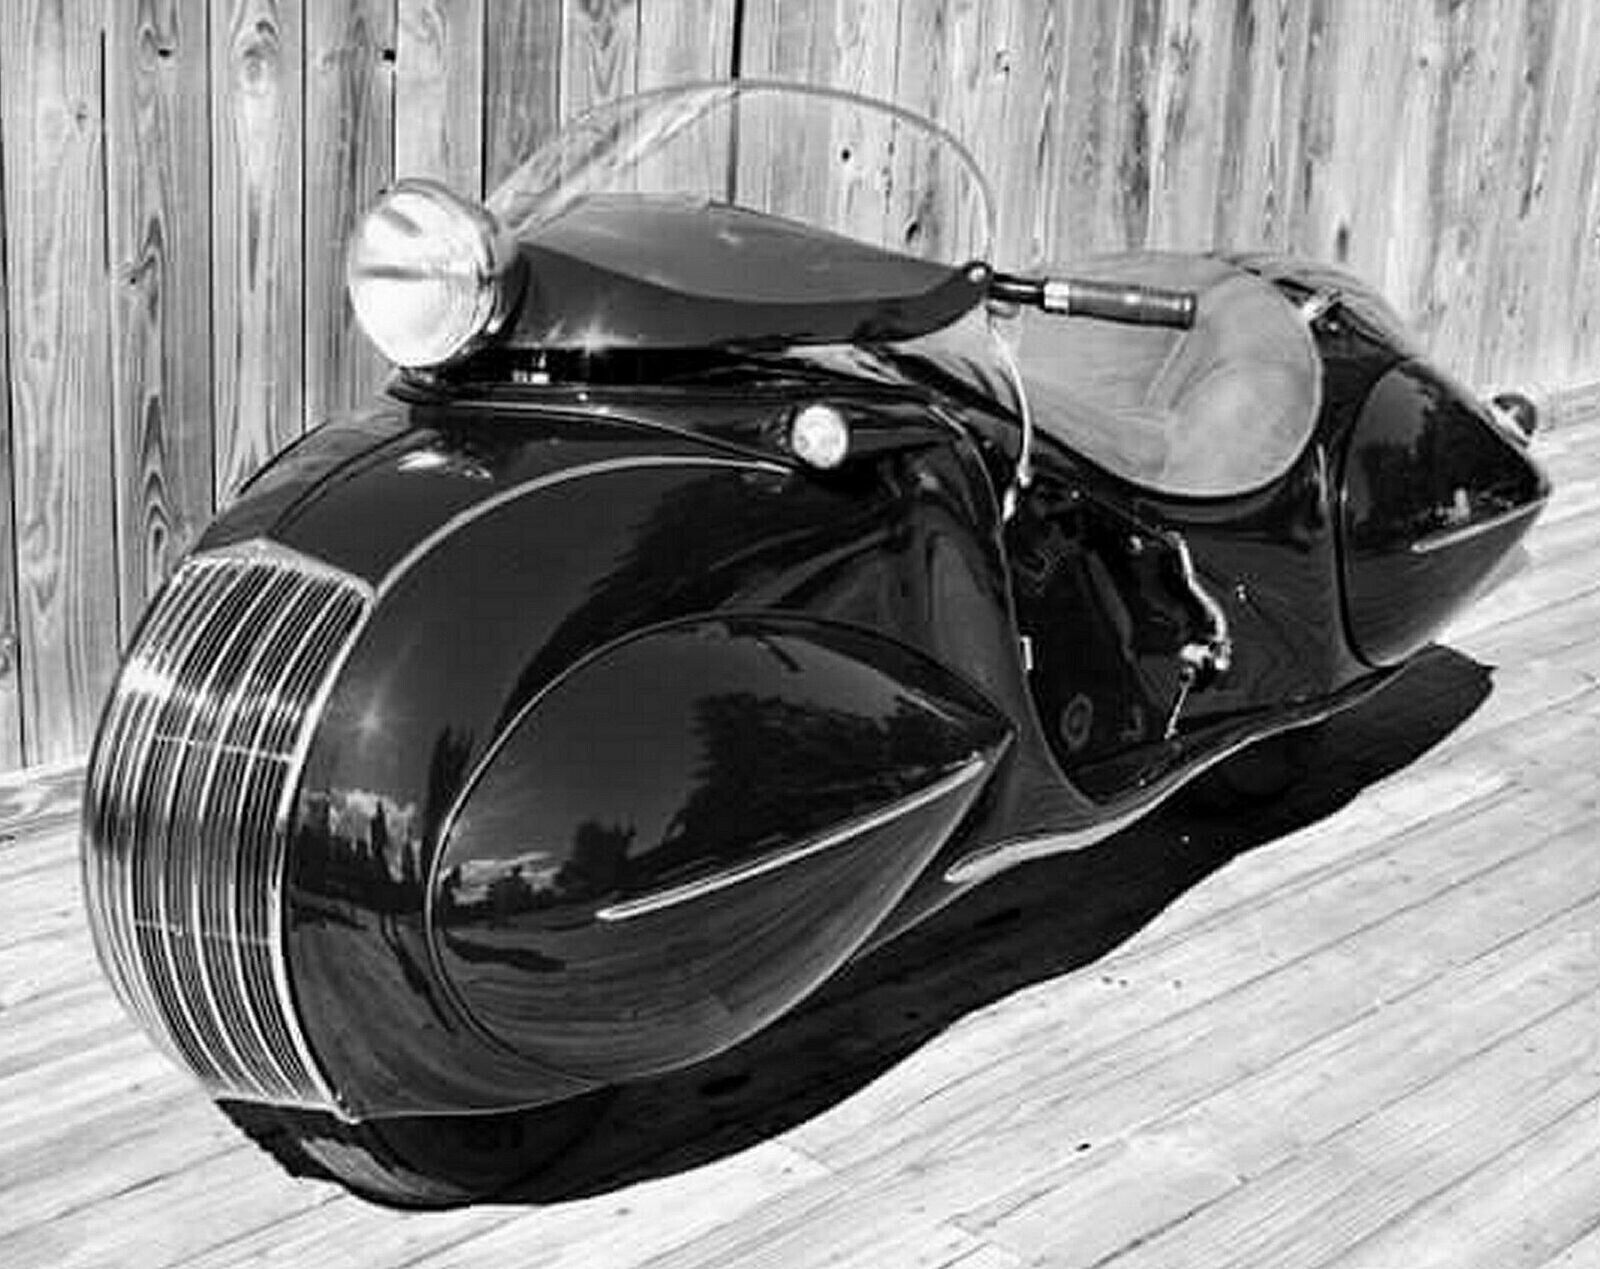 1936 HENDERSON Art Deco MOTORCYCLE Concept Bike Picture Photo 5x7